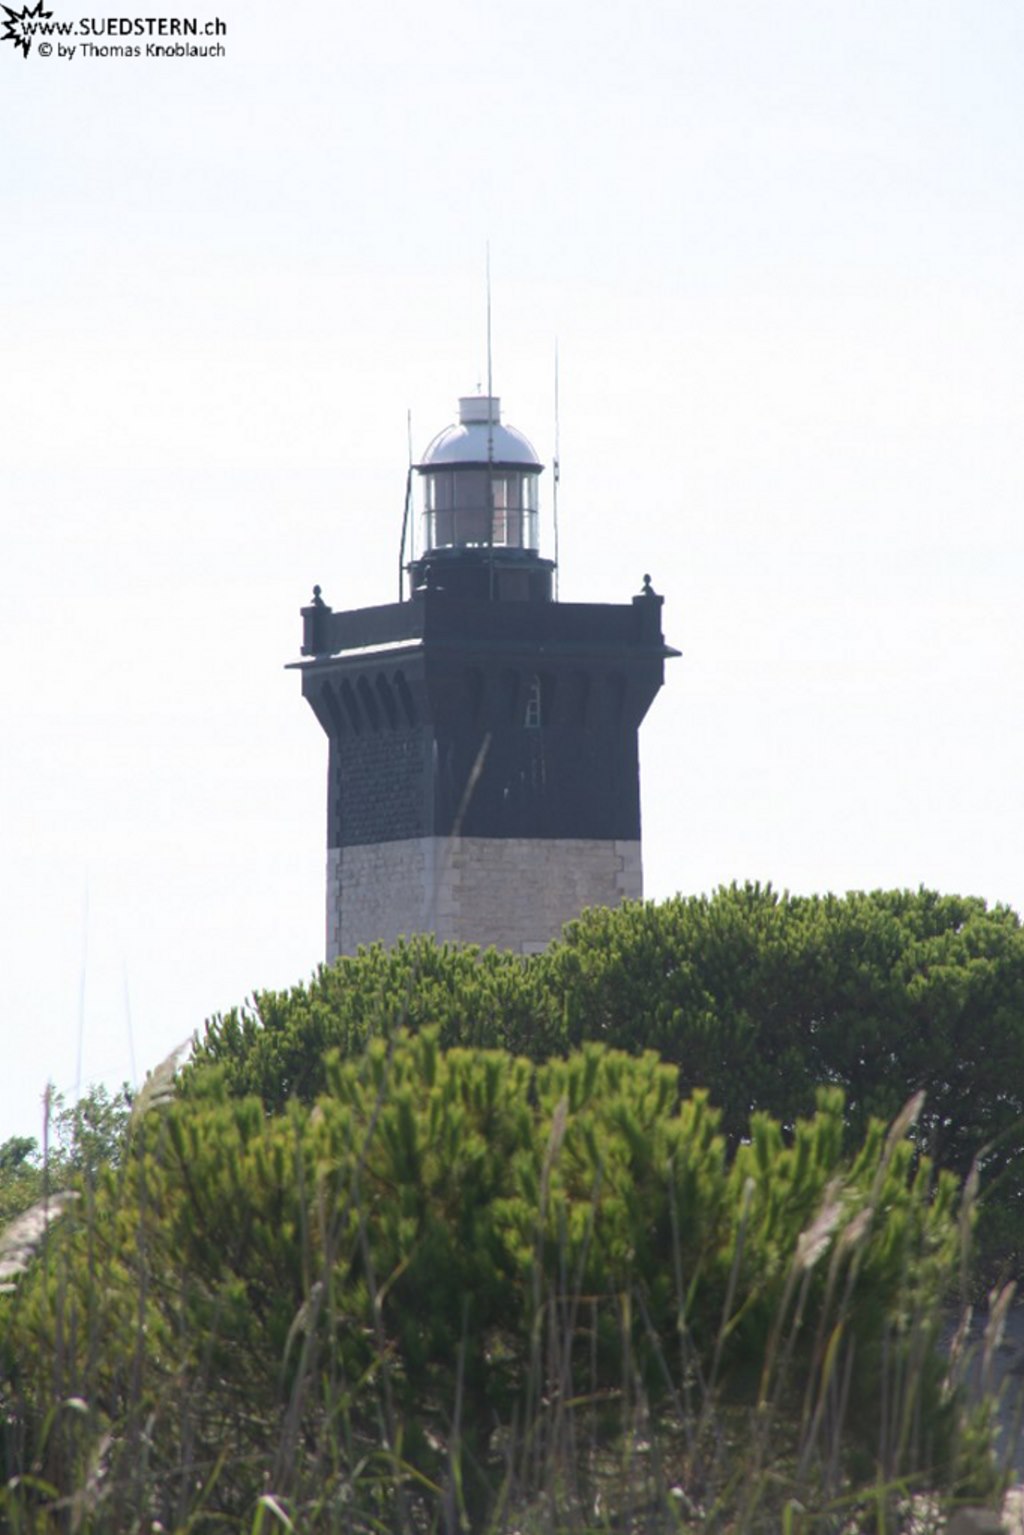 2008-08-27 - Lighthouse Port Camarque, france